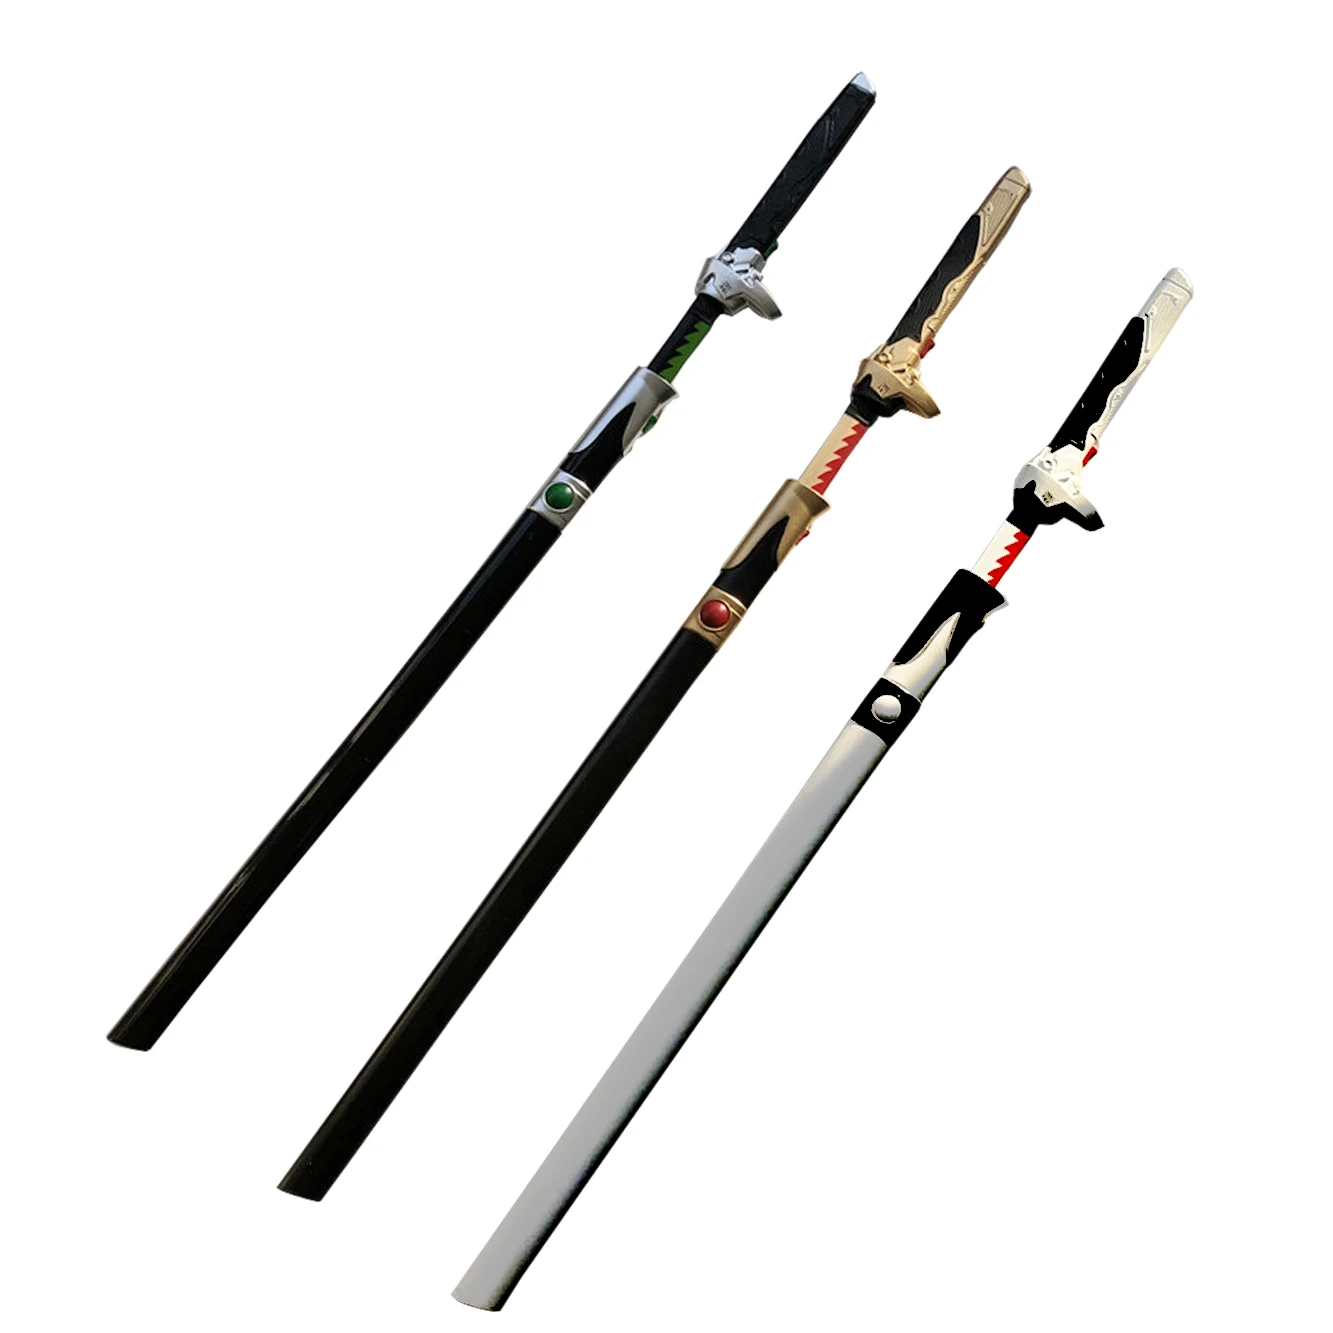 

Ninja Sword 1:1 Game Gaku Space Cosplay Katana Warder Genji Knife Game Role Play Weapon Model Toy Prop Sword Safety PU 106cm